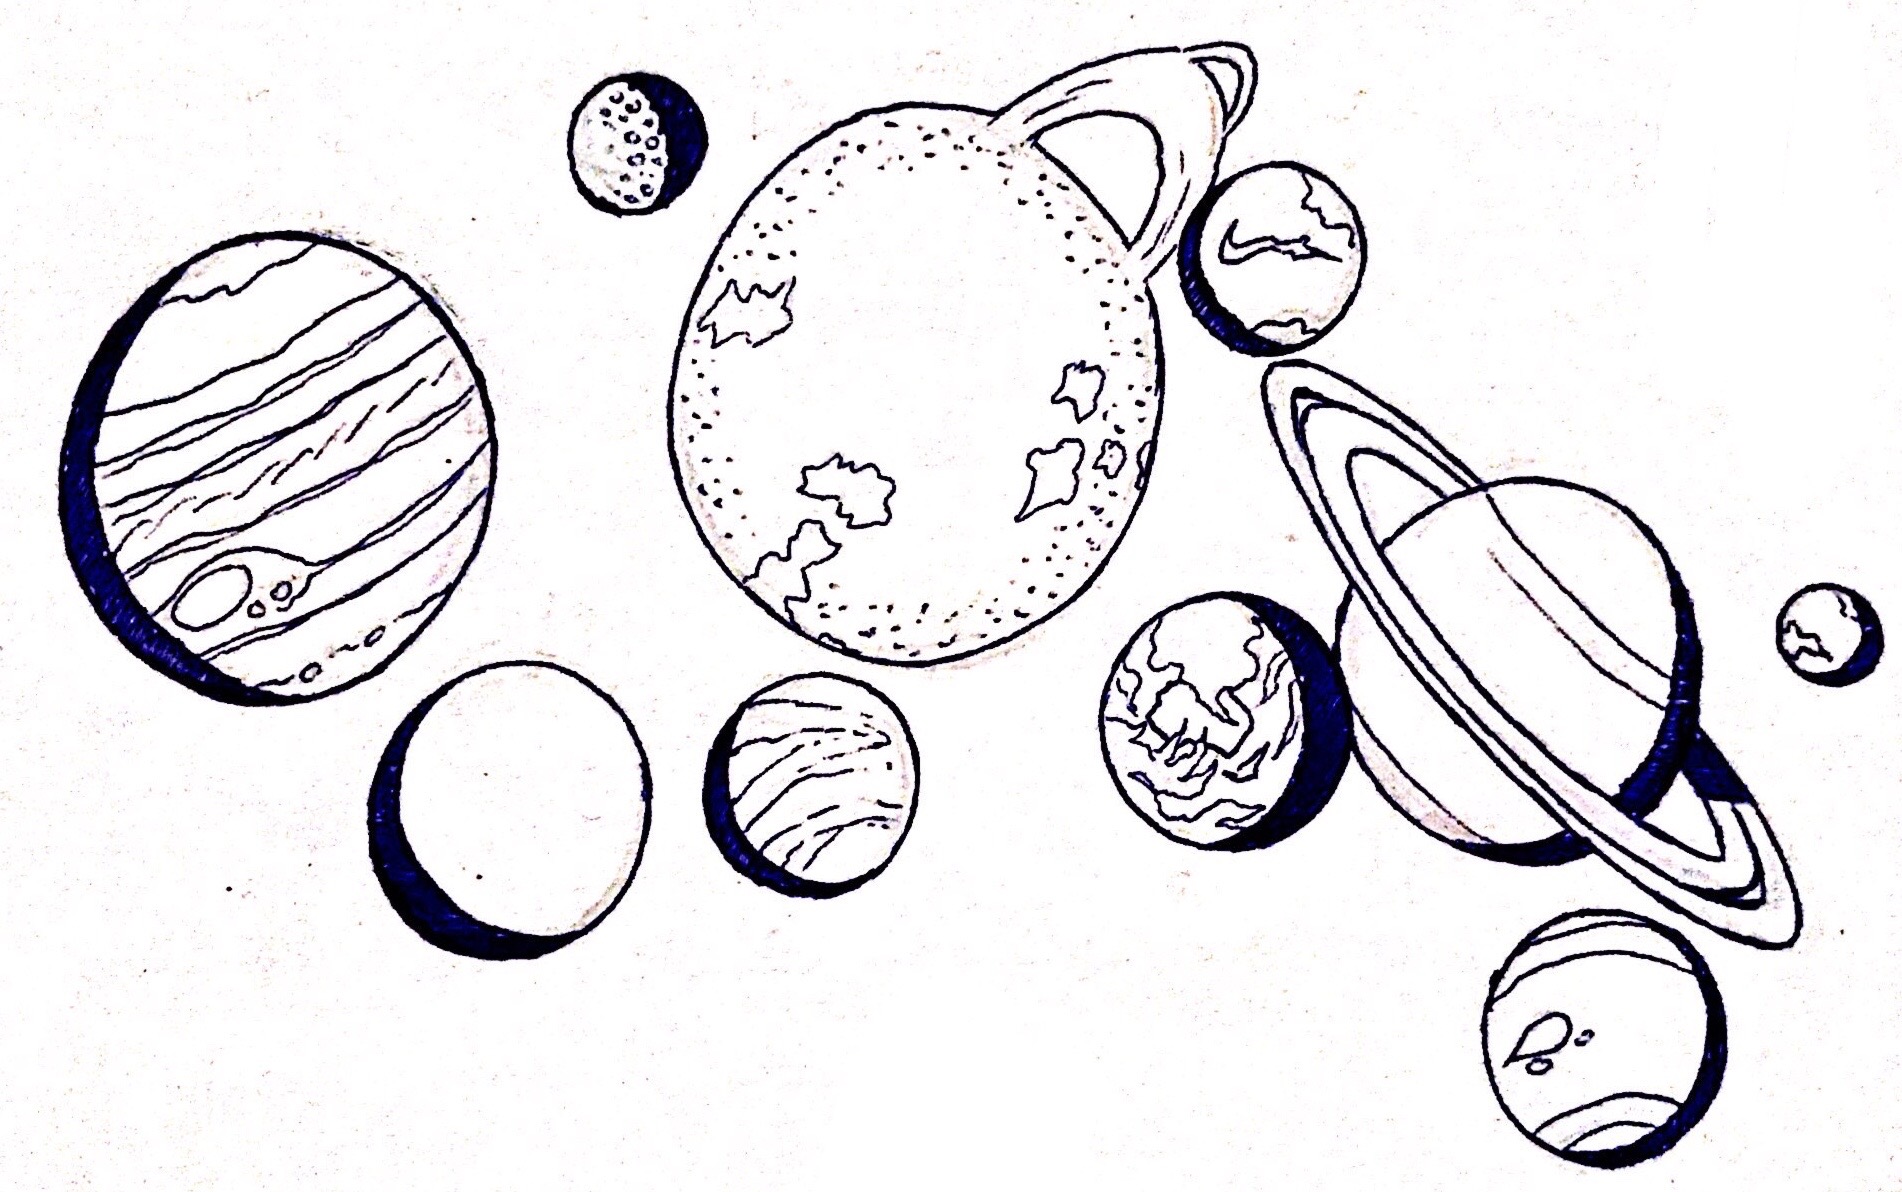 Solar System (cartoon style) by aericmon on DeviantArt